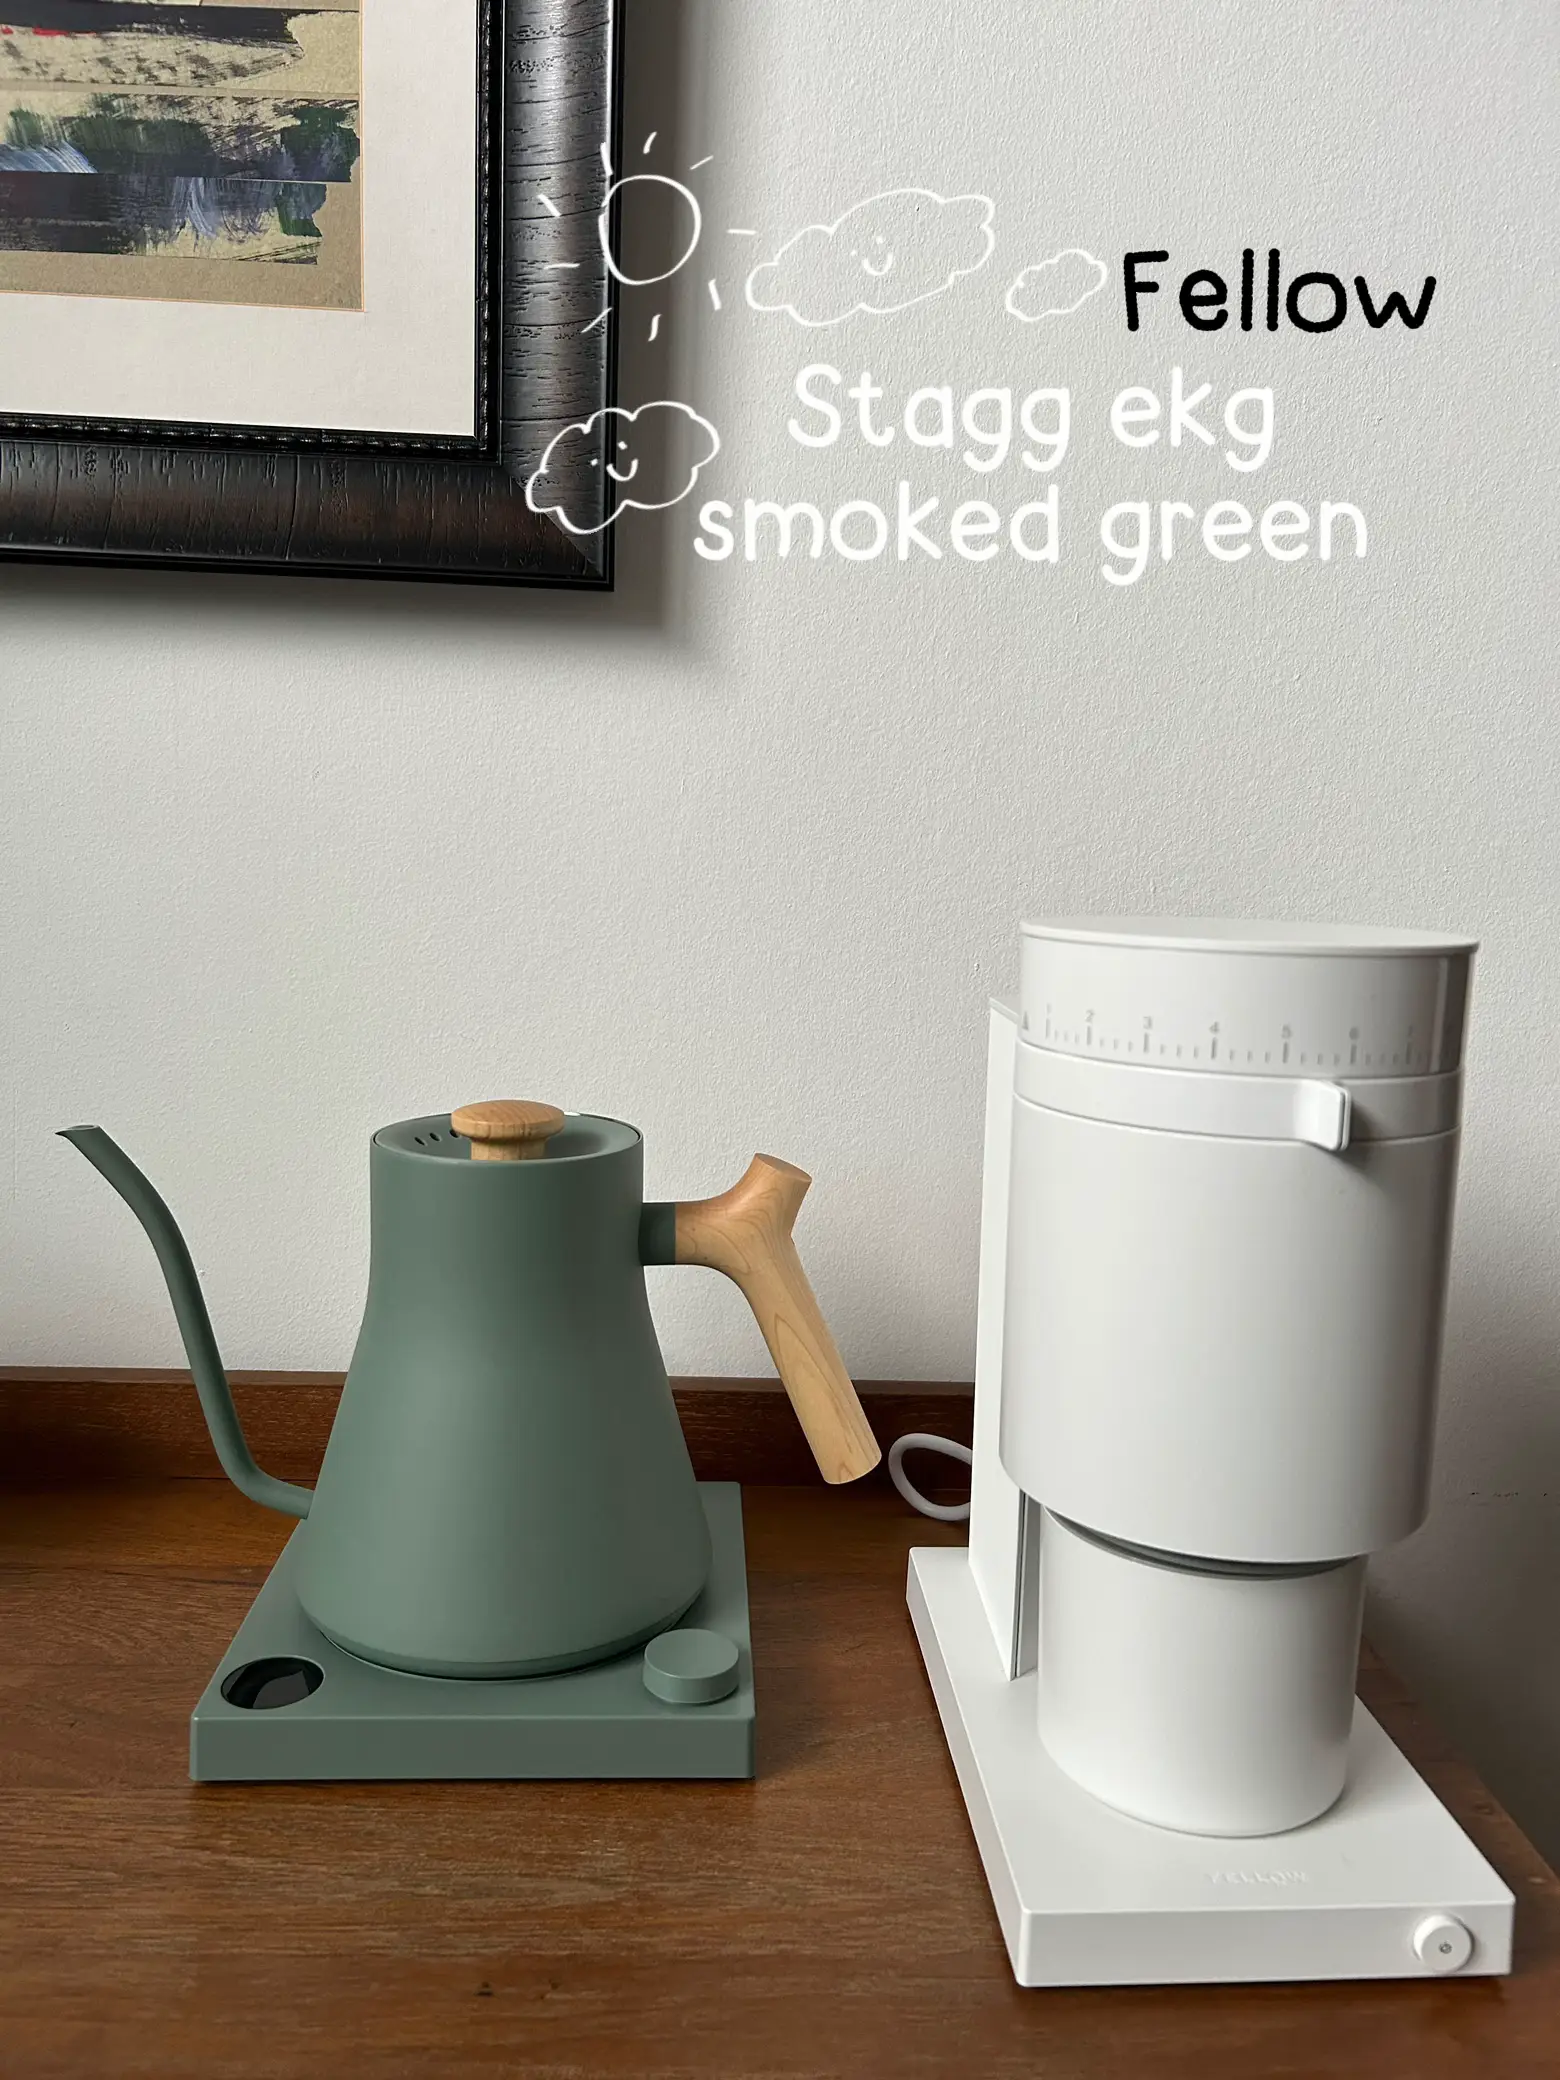 FELLOW STAGG EKG SMOKE GREEN ELECTRIC KETTLE